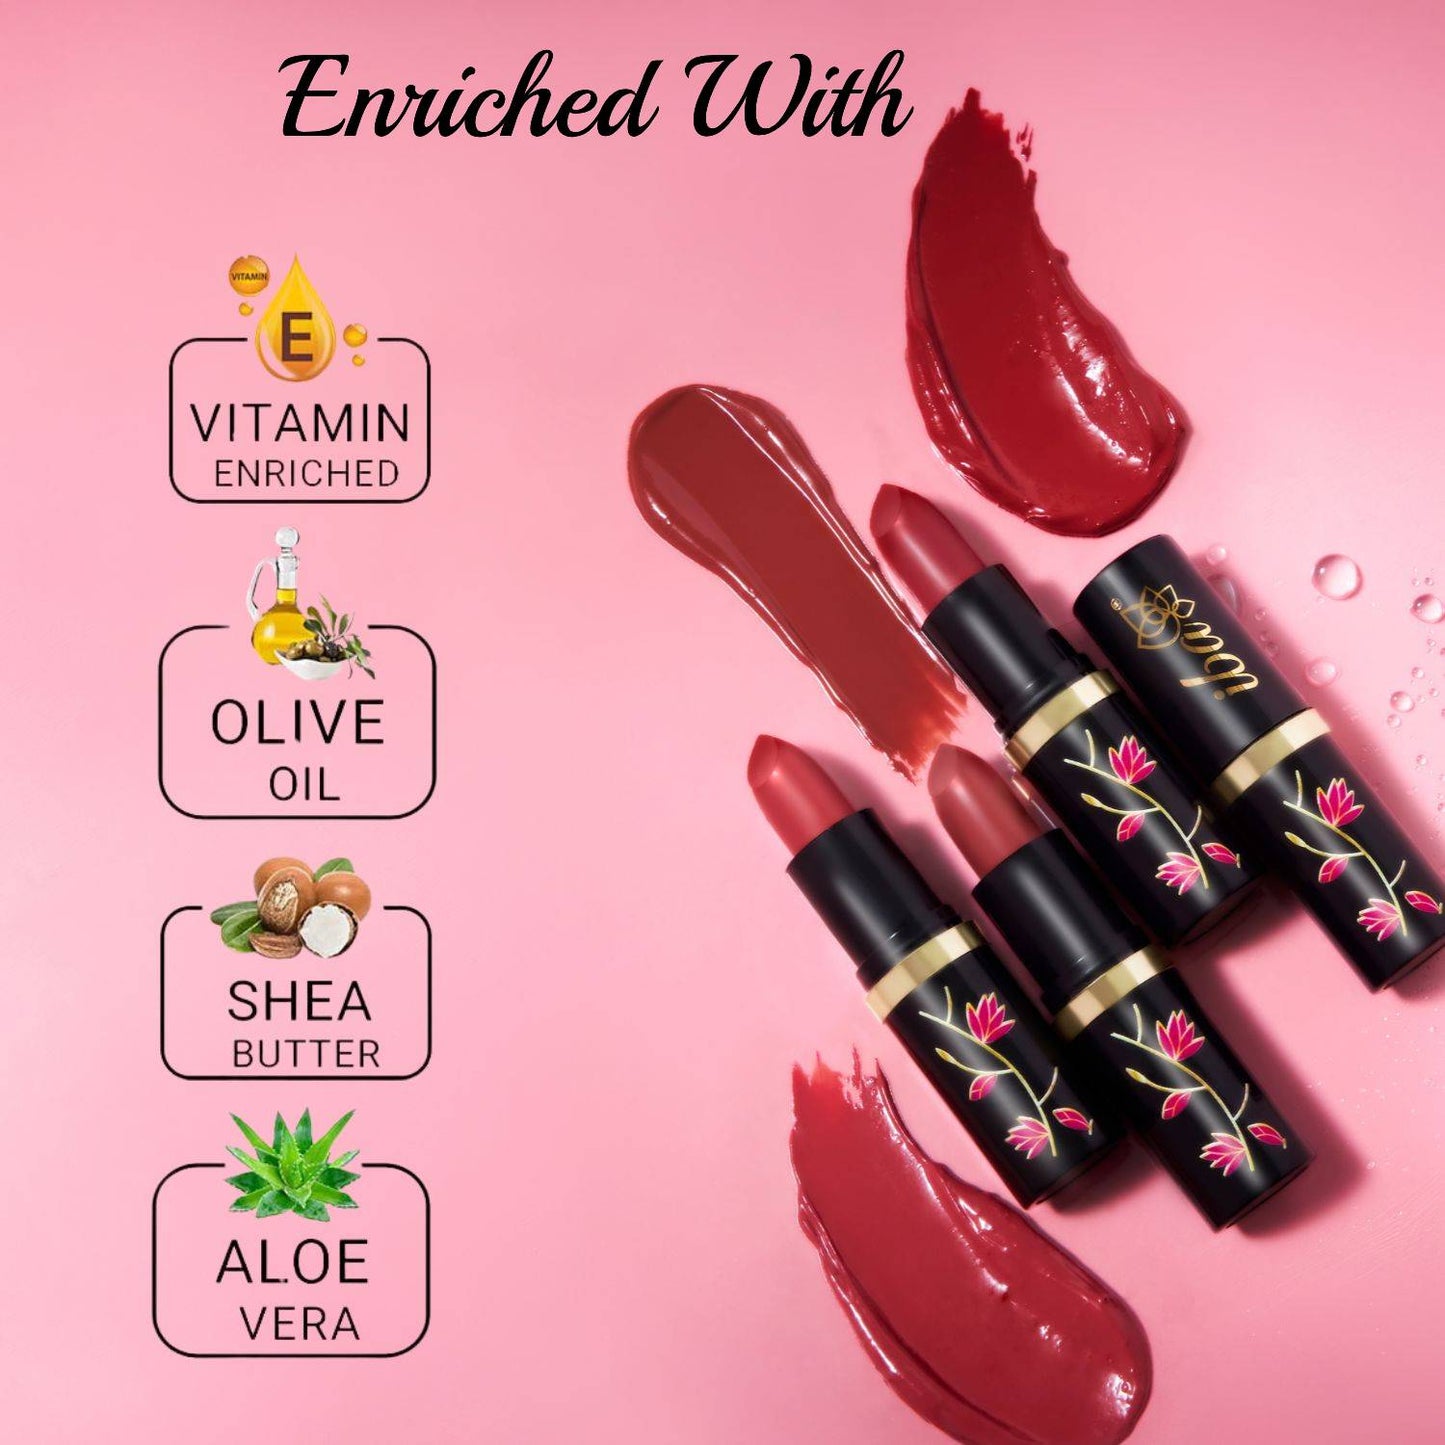 Iba Moisture Rich Lipstick Limited Edition - Sunday Brunch